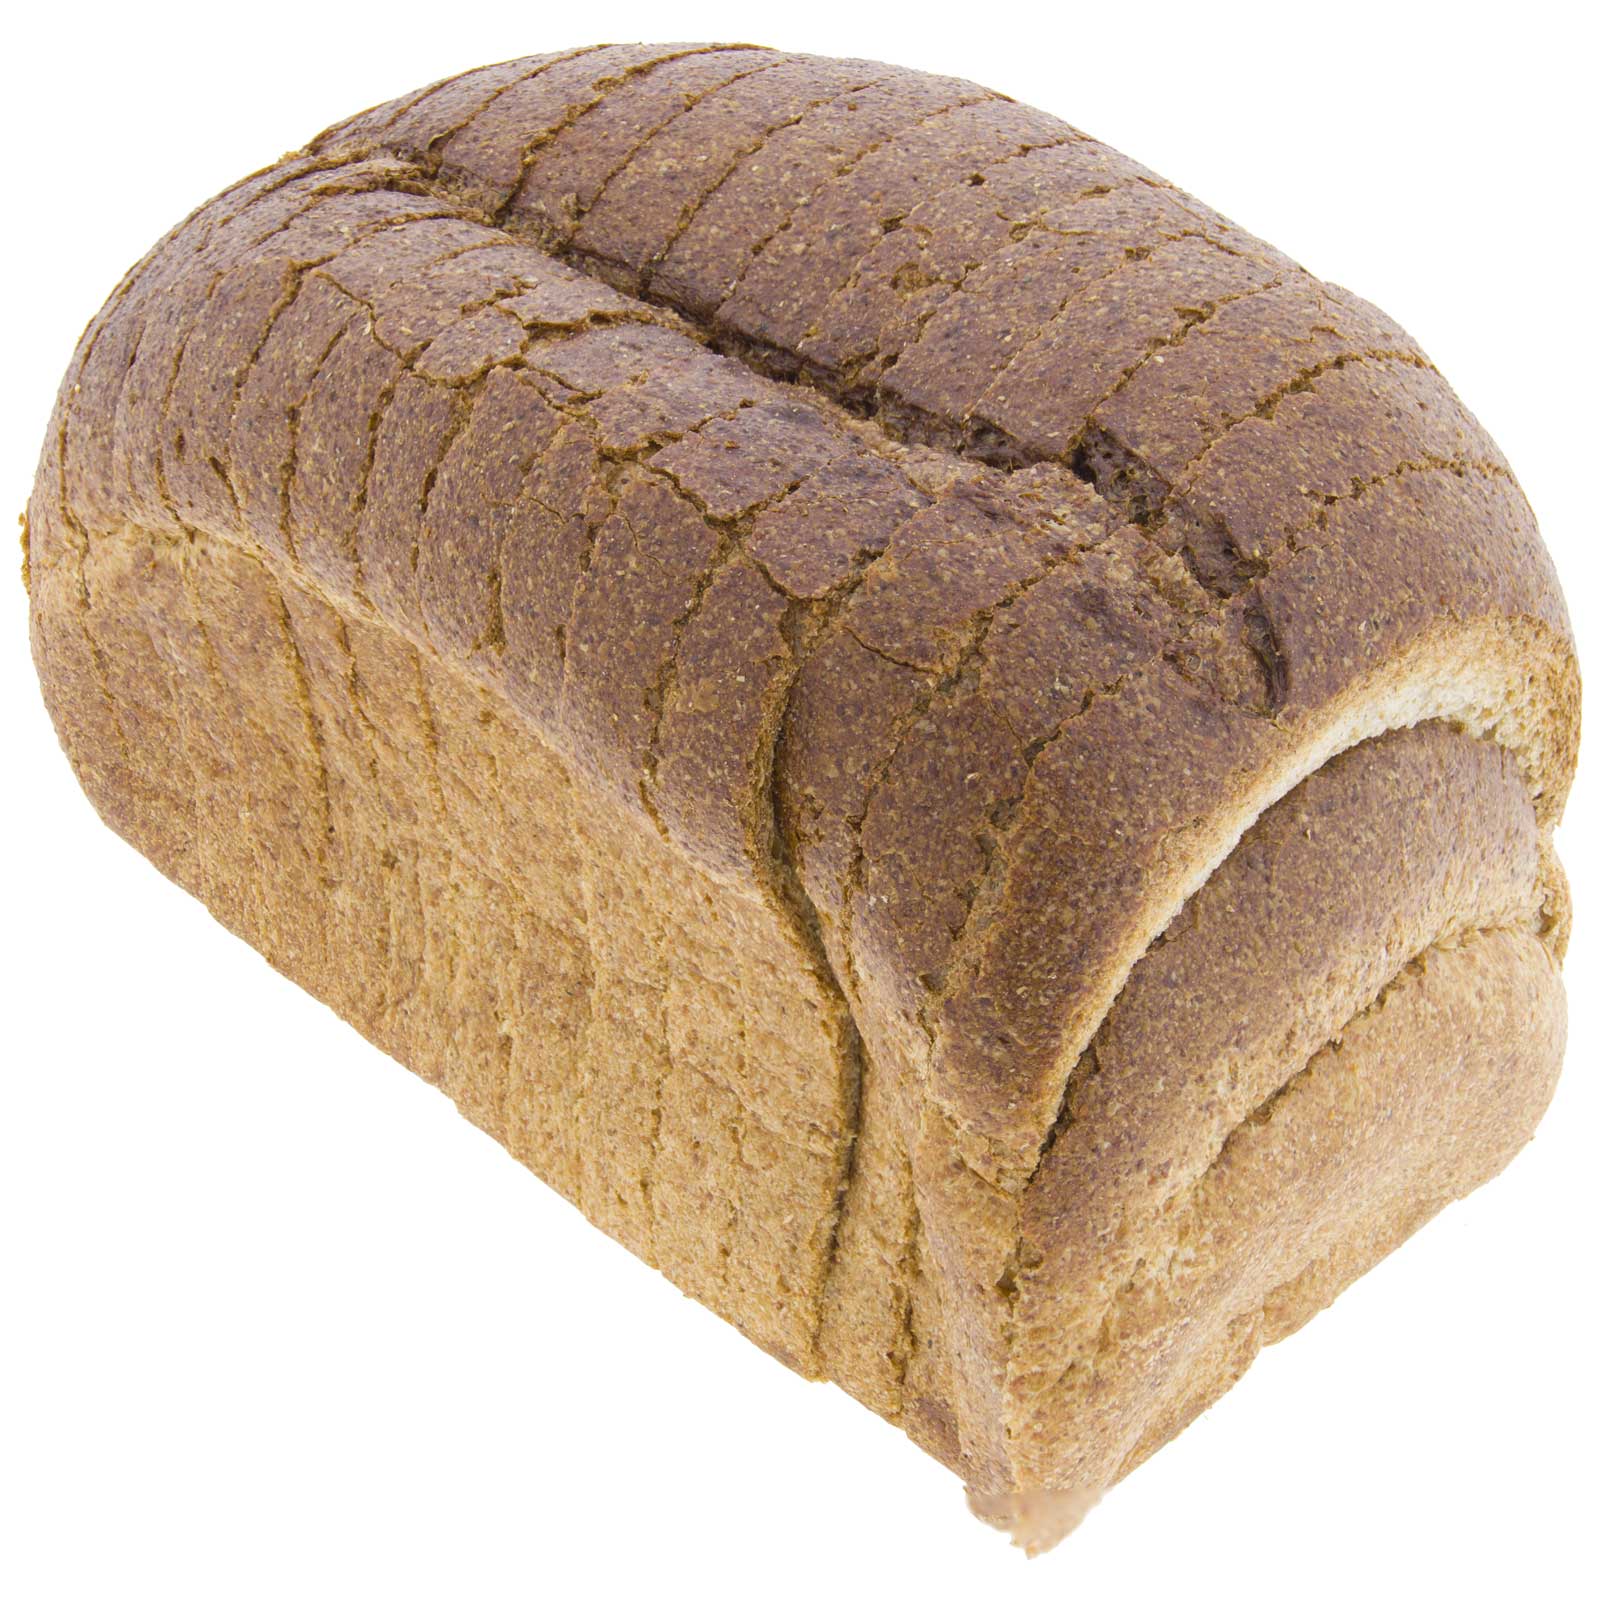 Rye Bread 400g Integral Ecology